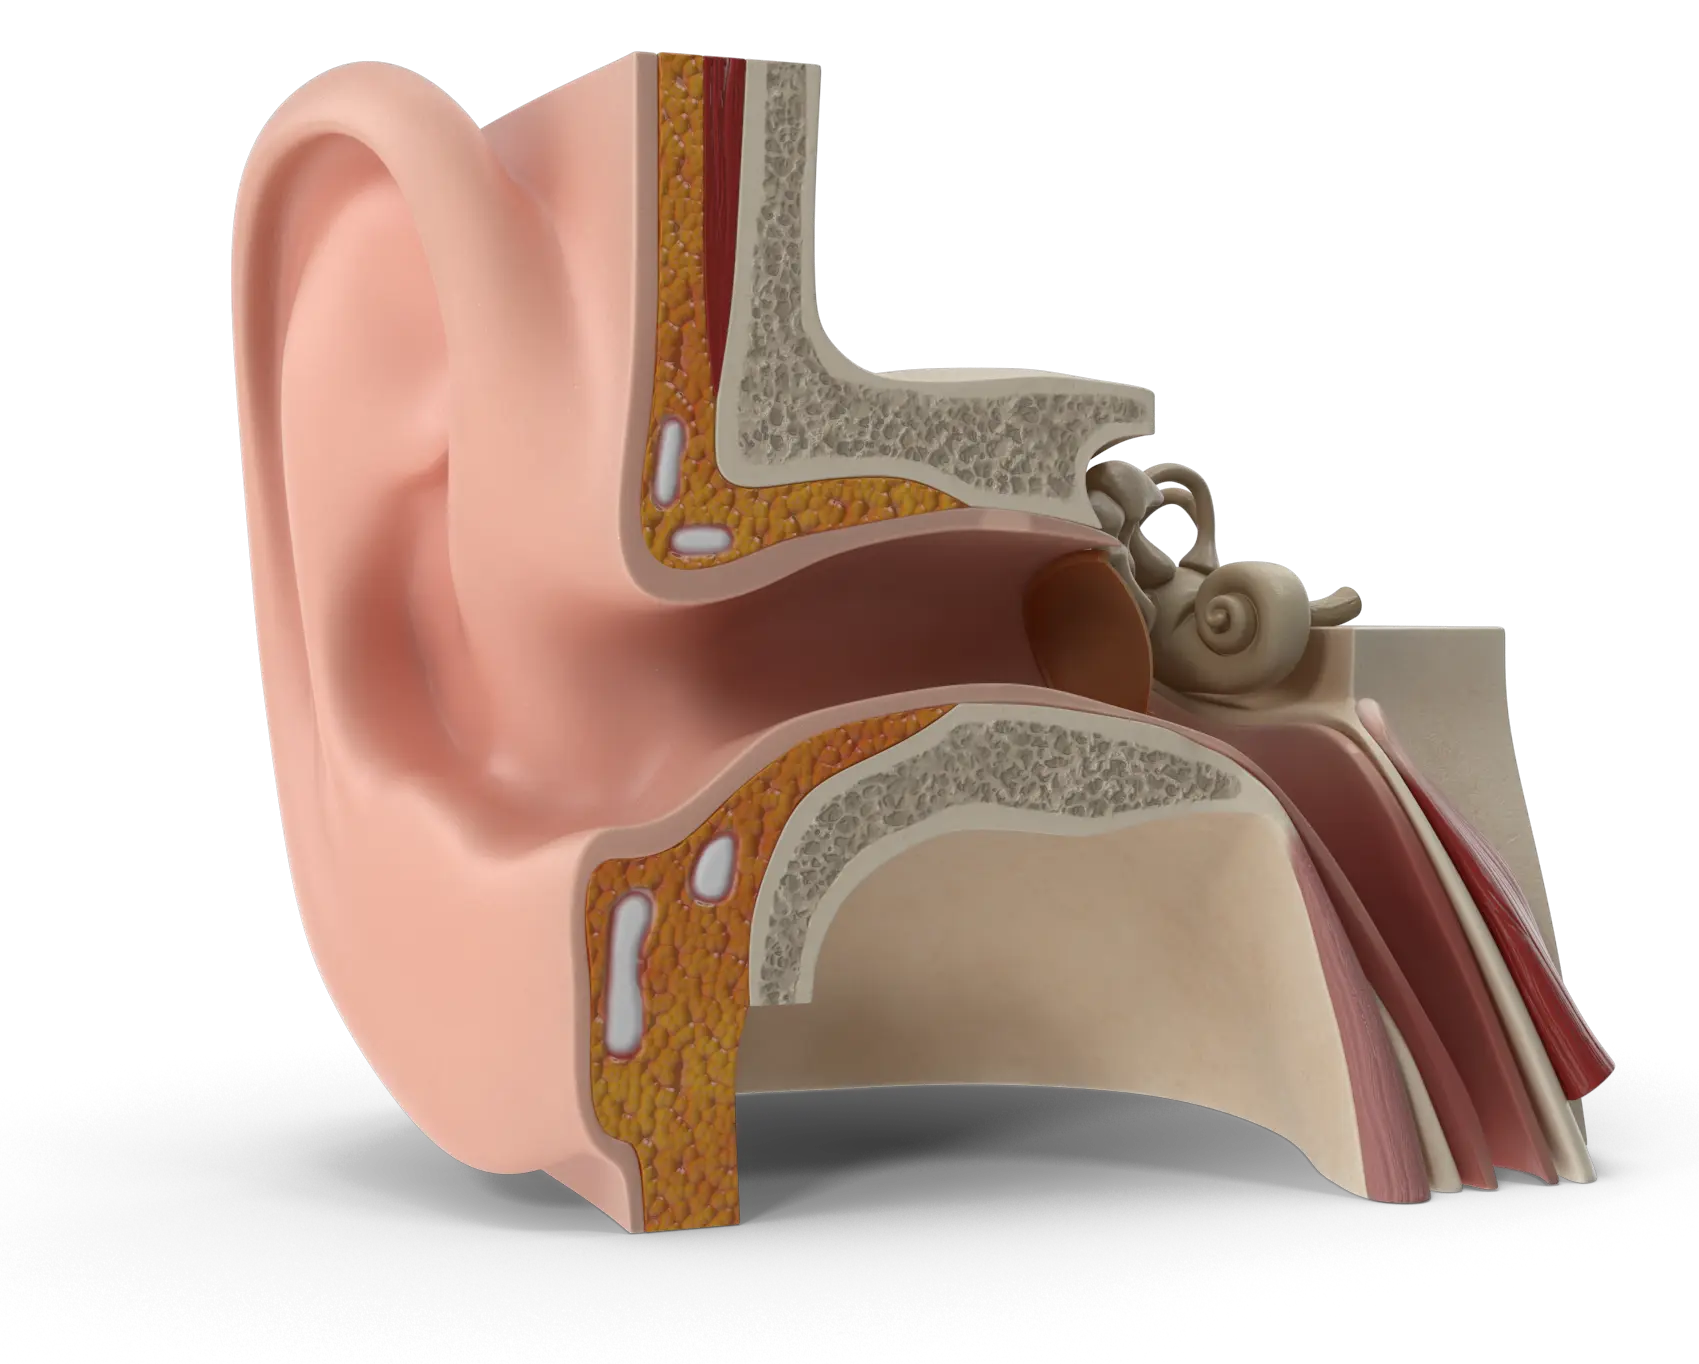 Human Ear Close-Up Illustrations